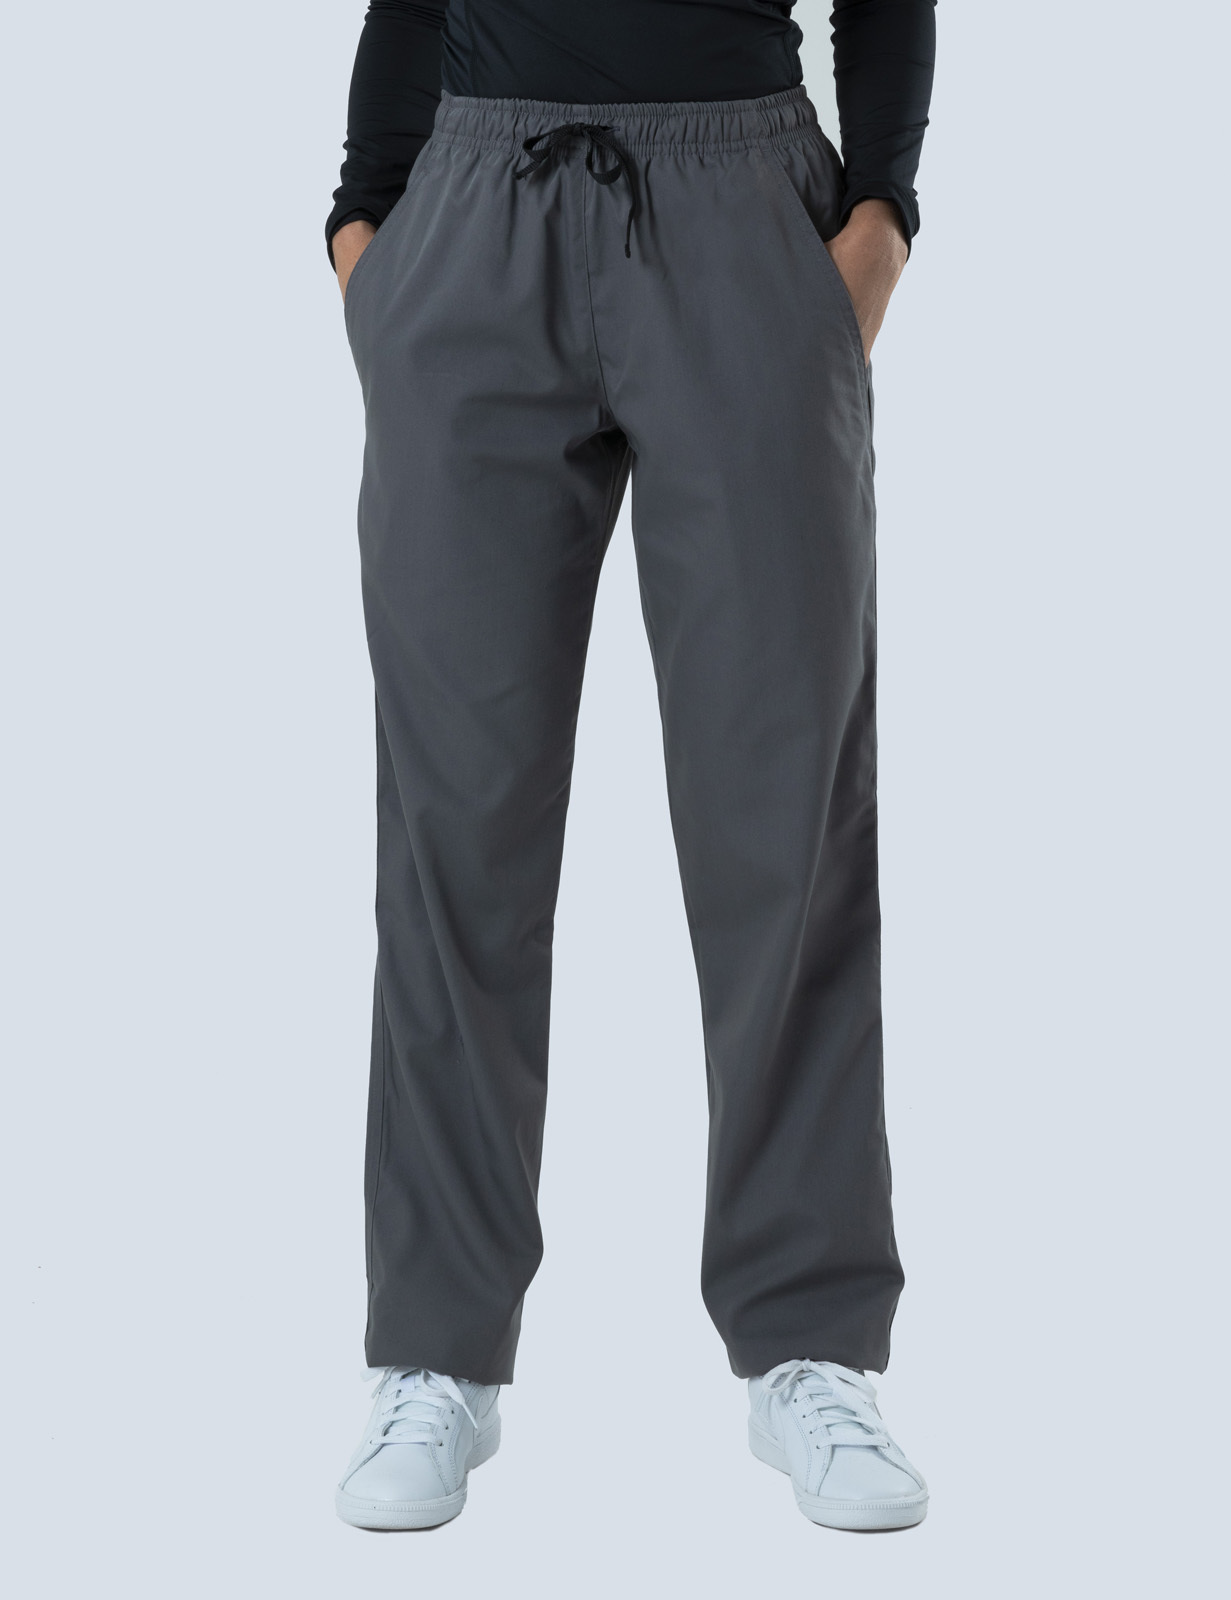 Women's Regular Cut Pants - Steel Grey - X Large